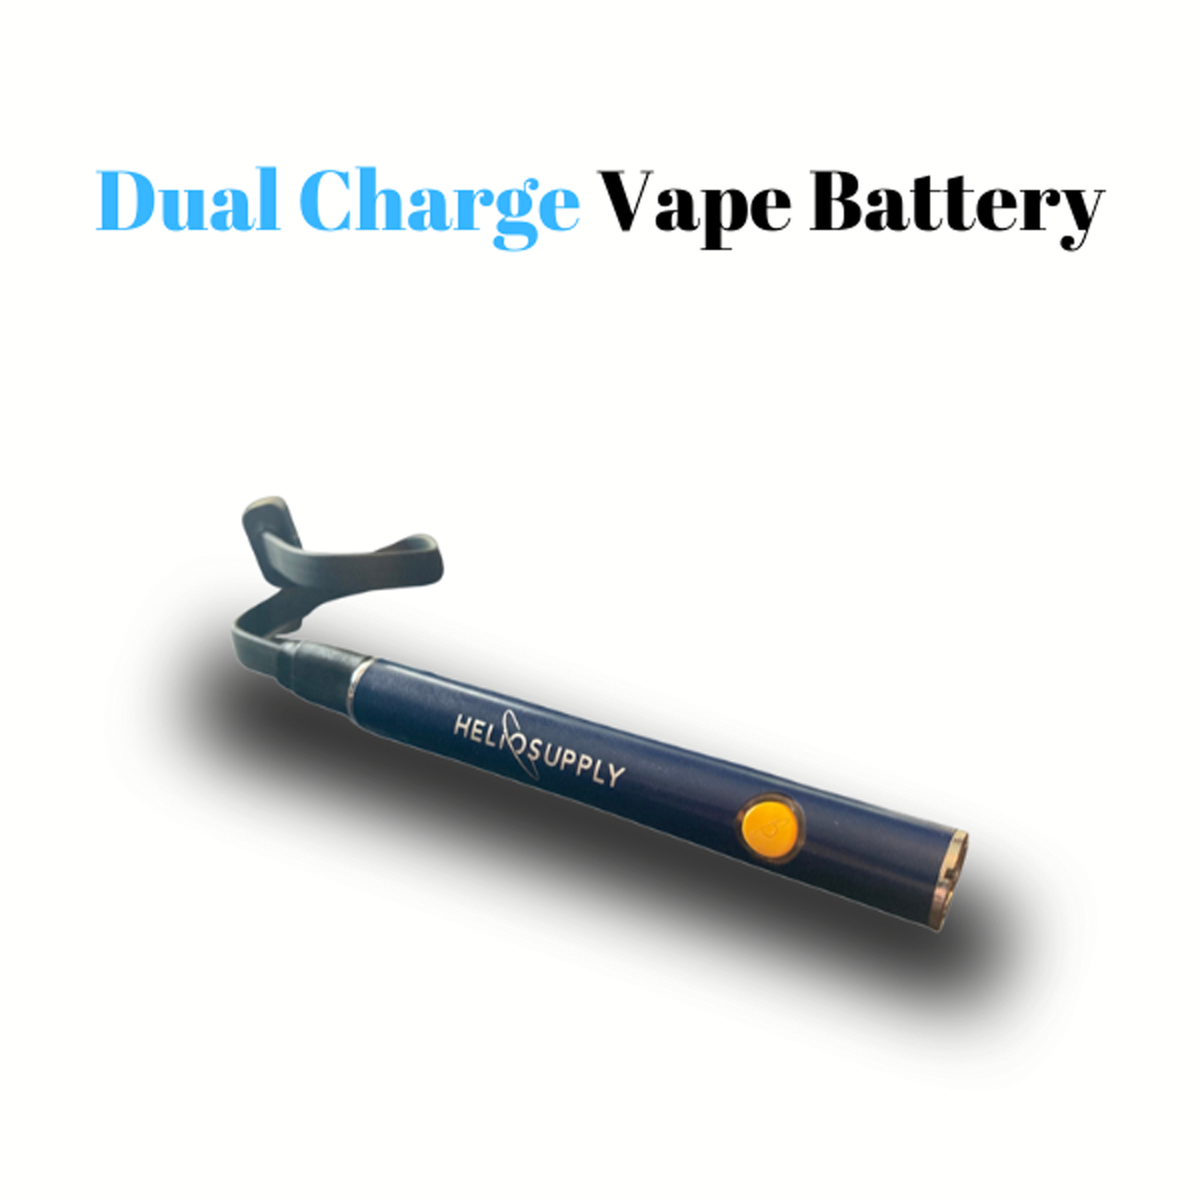 Dual Charge Vape Battery